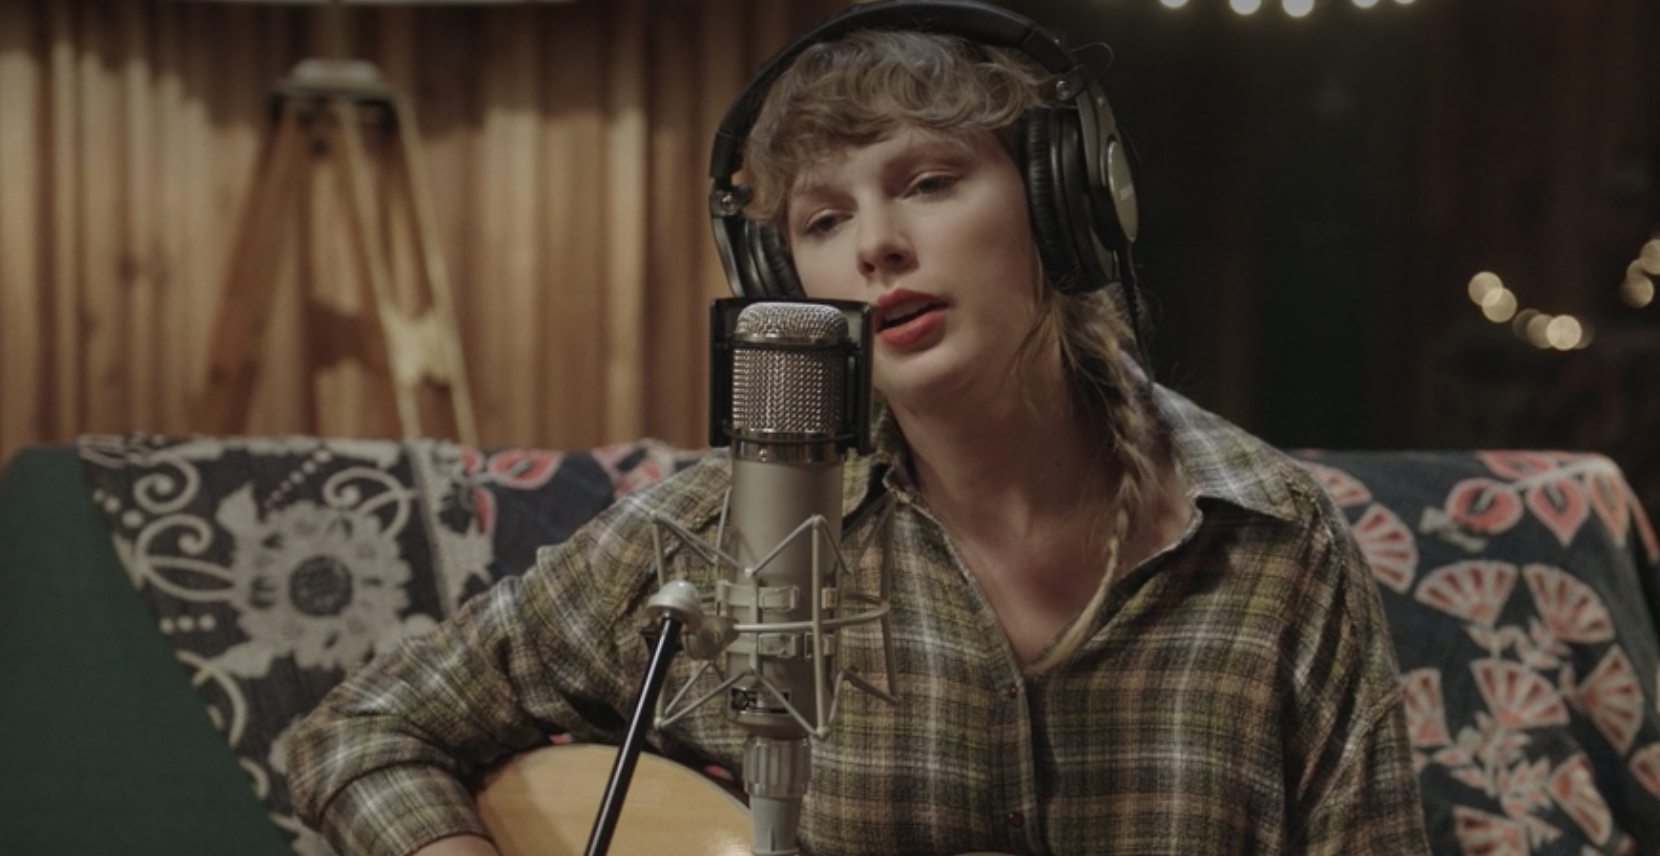 Taylor singing Mirrorball